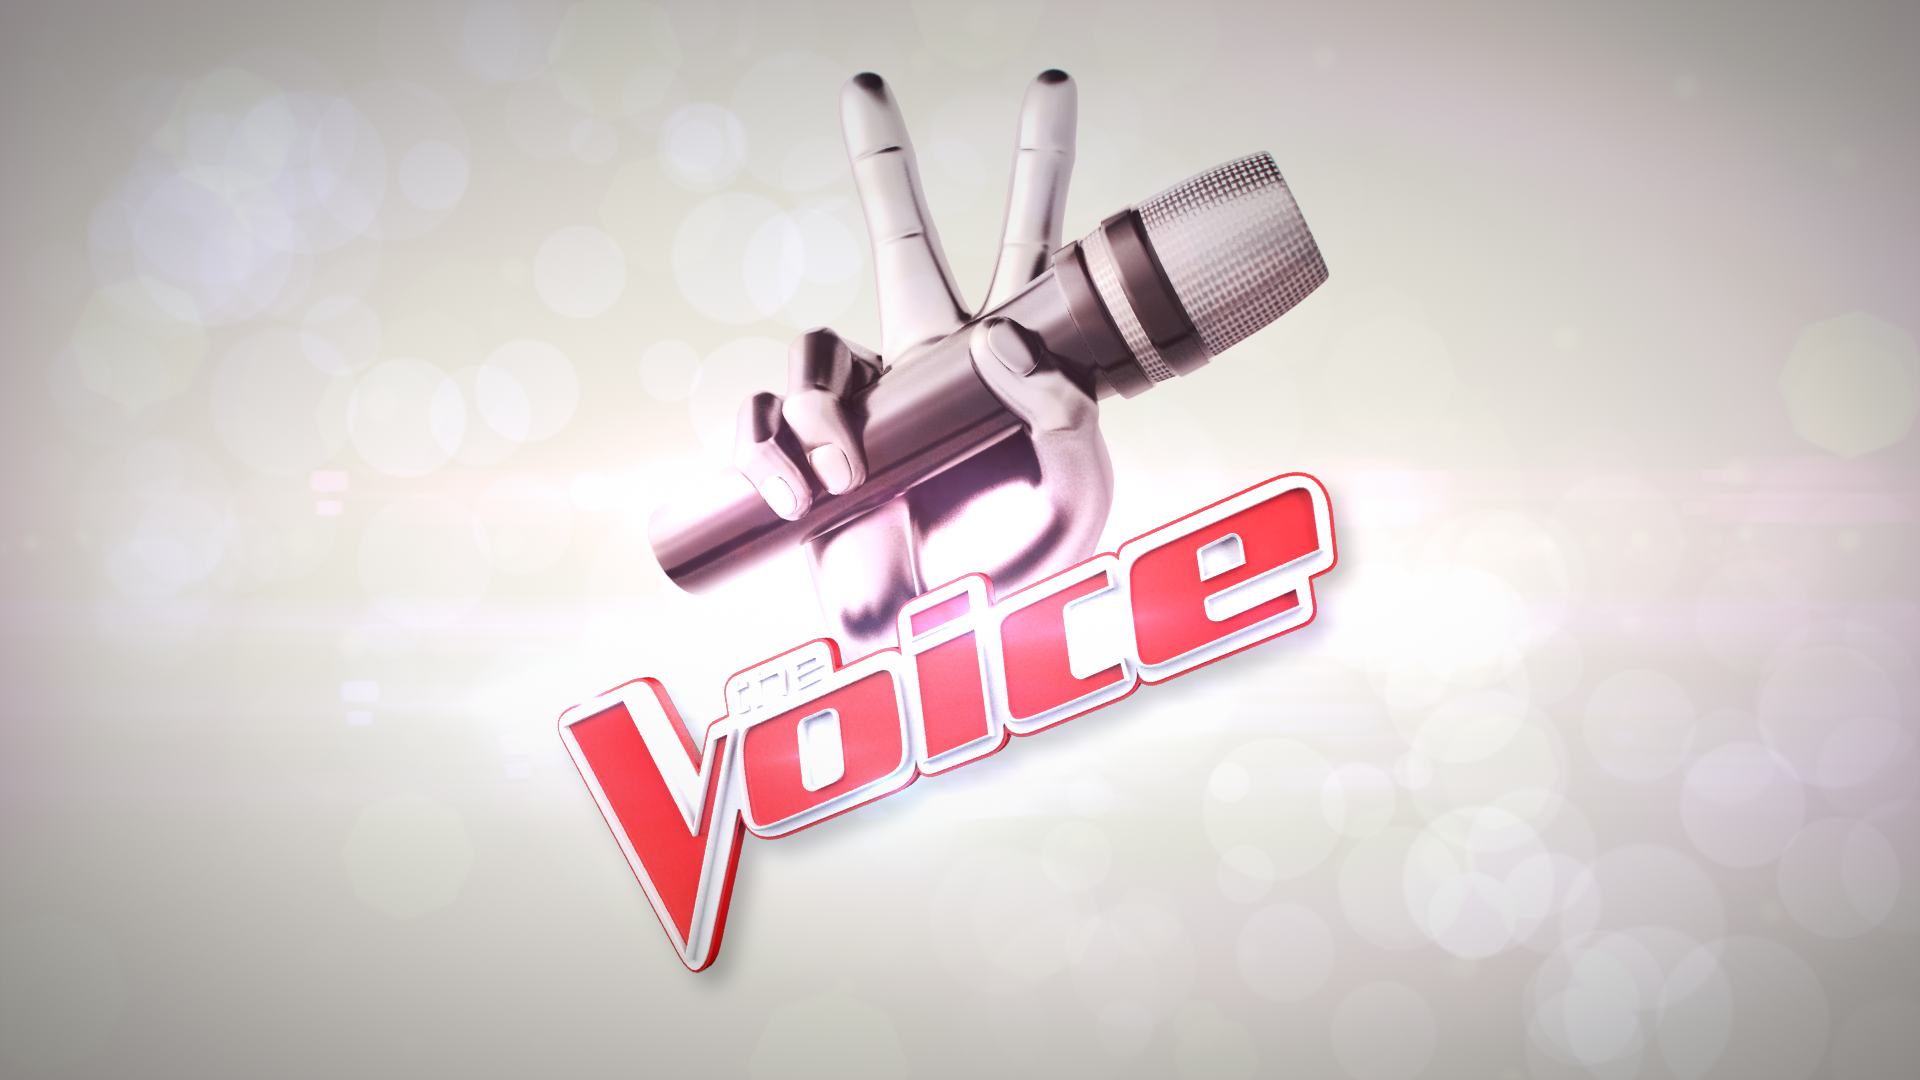 Voice. Шоу голос заставка. Шоу голос логотип. Шоу голос фон. Заставка программы голос.